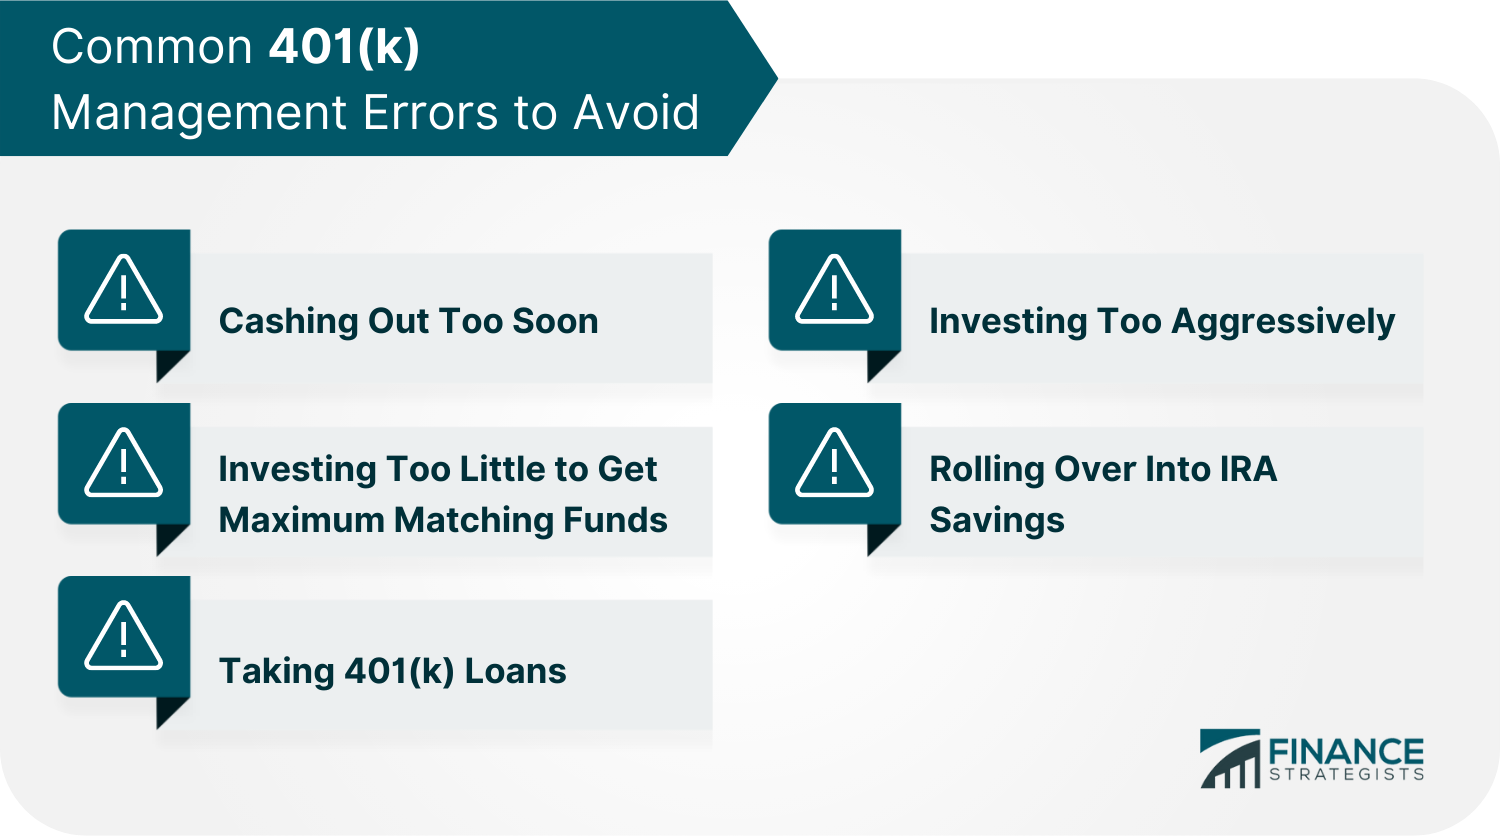 Common 401(k) Management Errors to Avoid